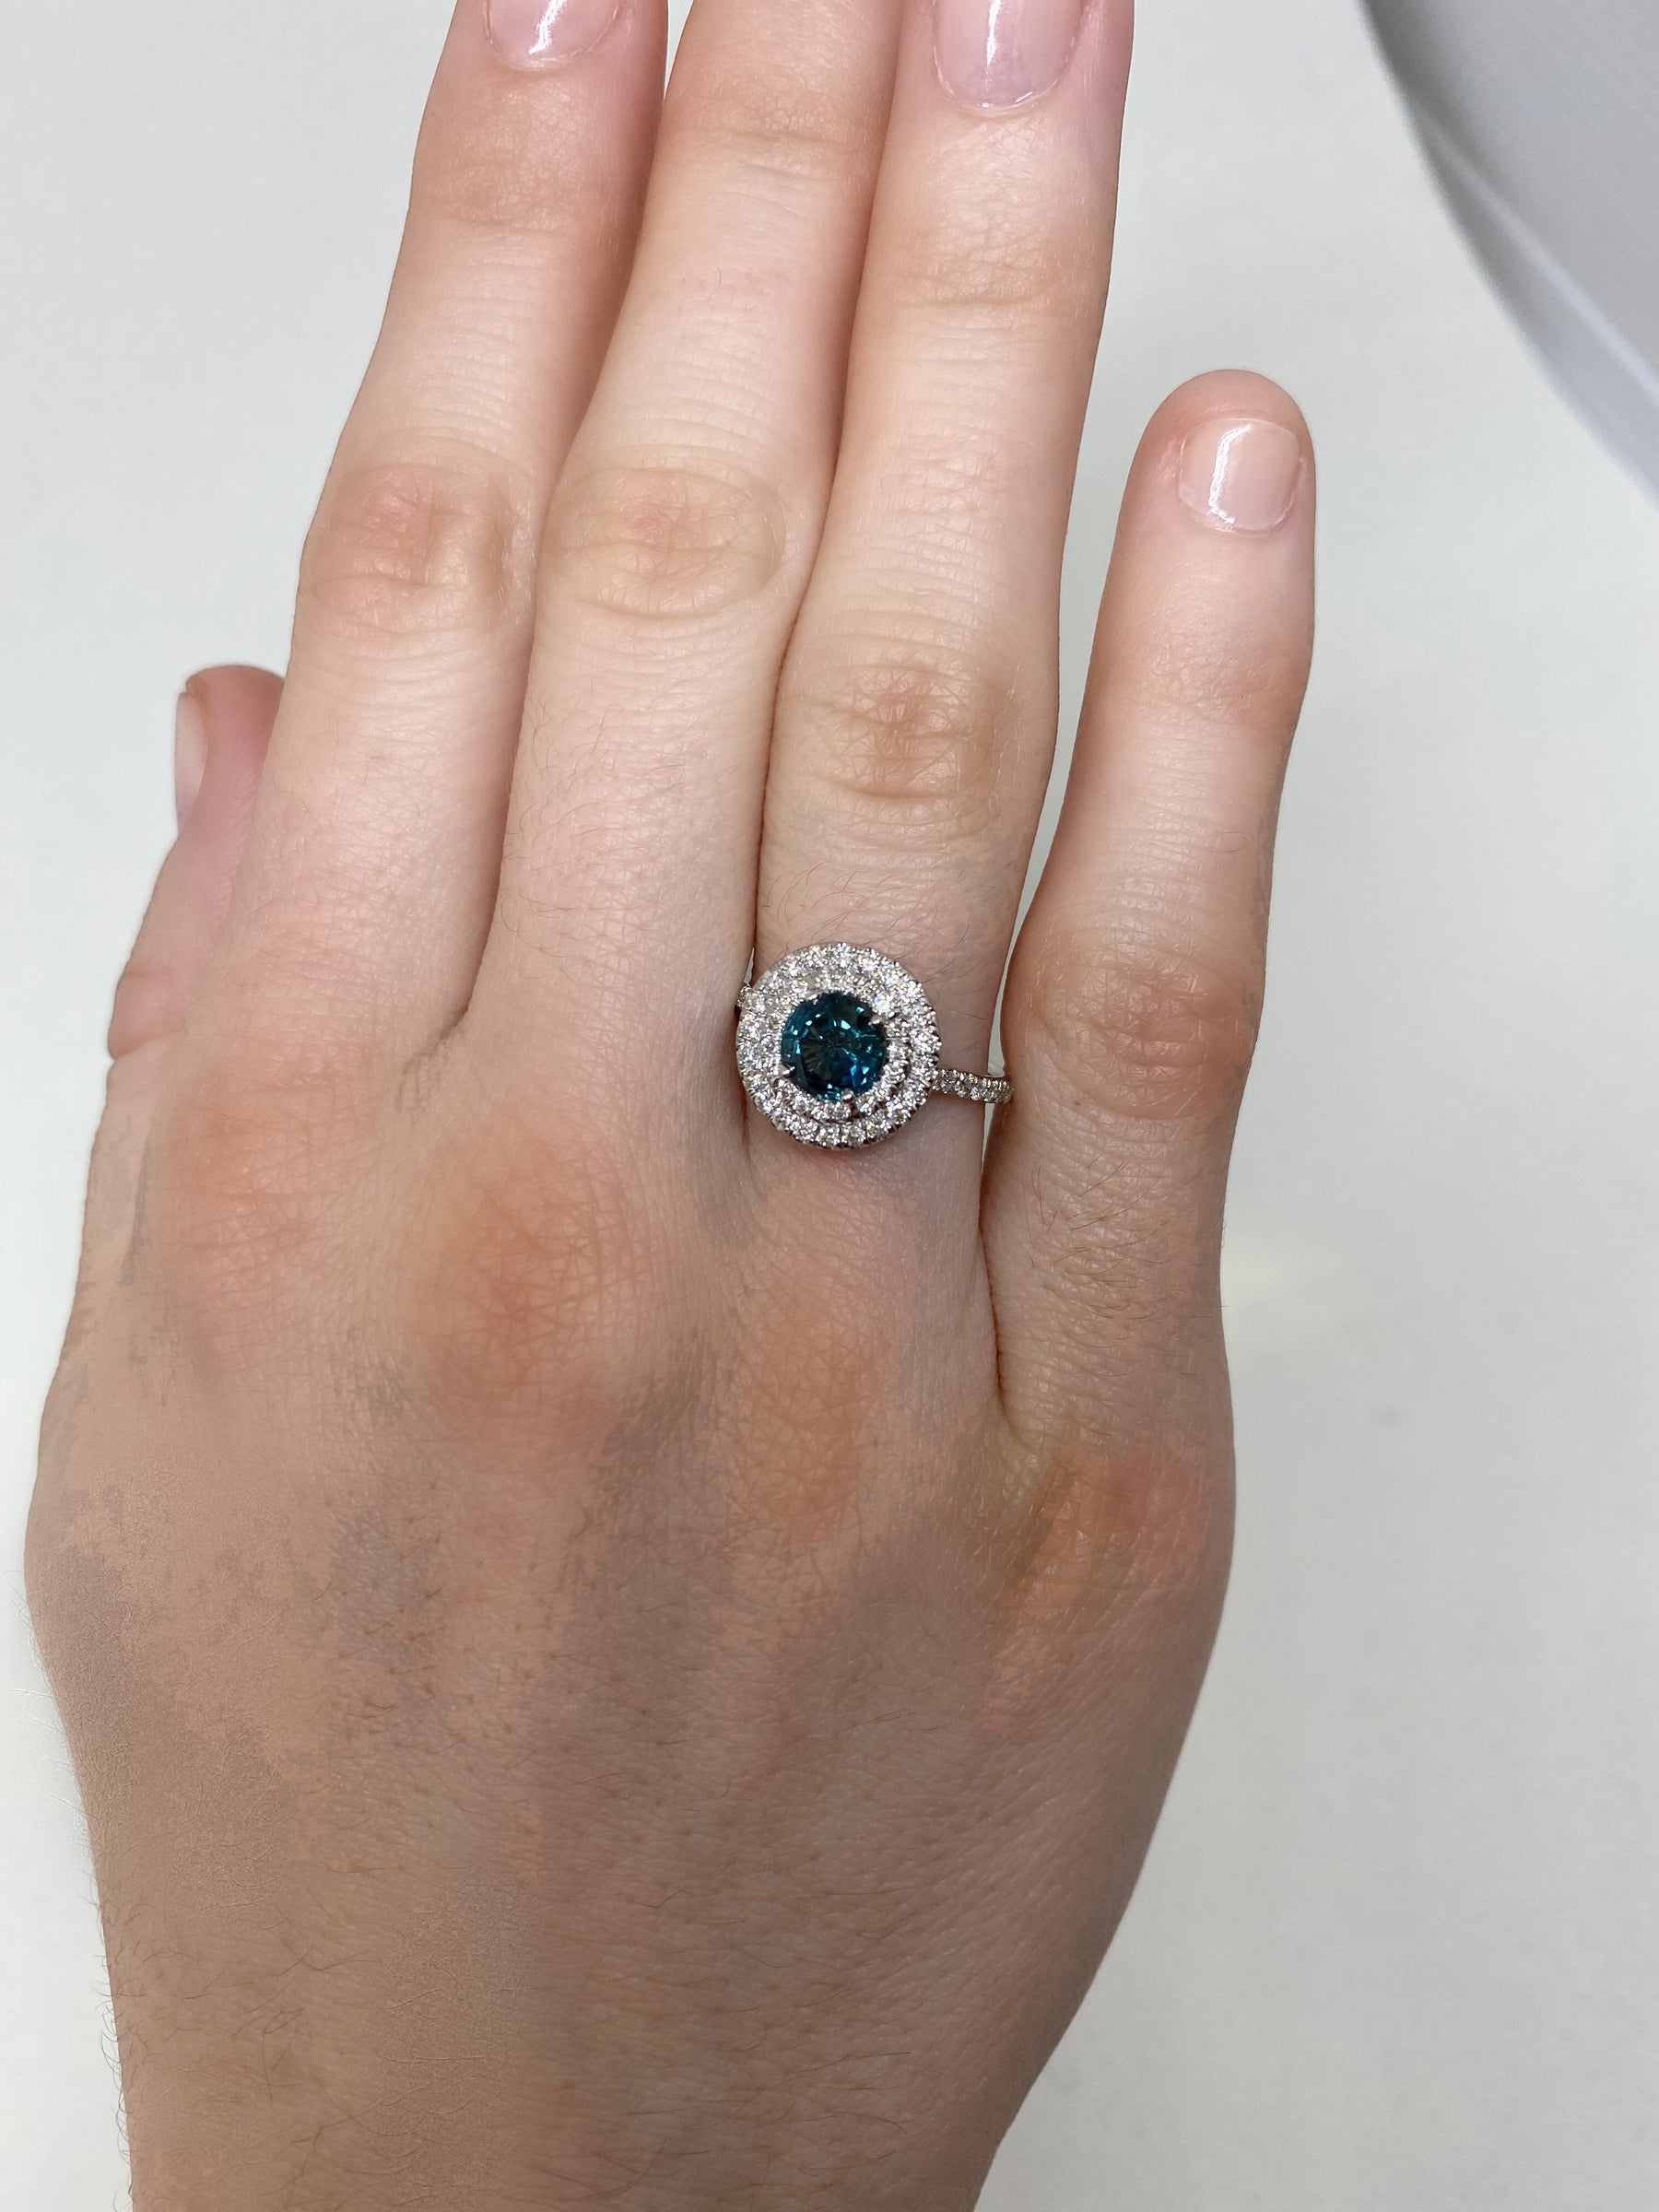 18K White Gold Double Diamond Halo Montana Sapphire Ring on Model